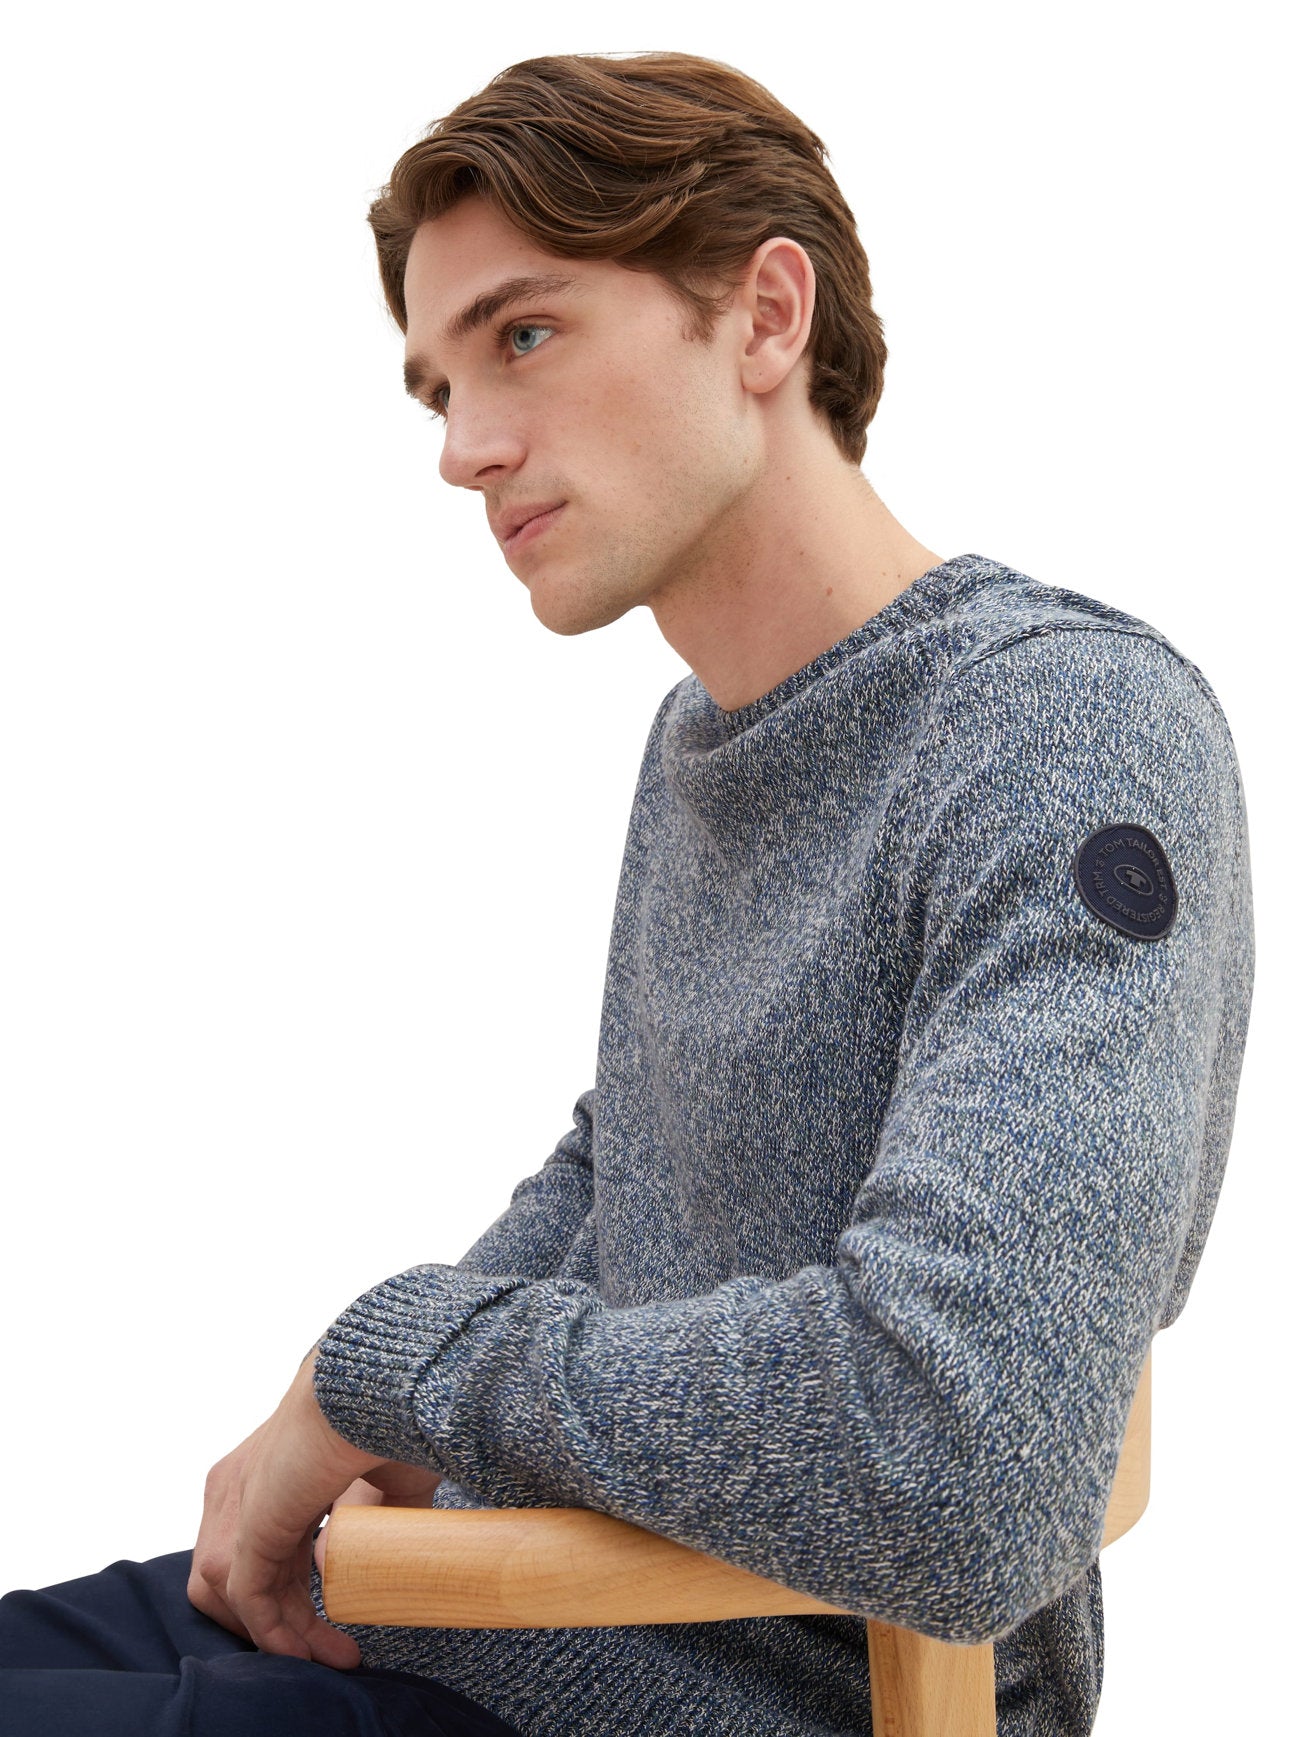 Knitted Sweater With Round Neckline_1038246_32741_02